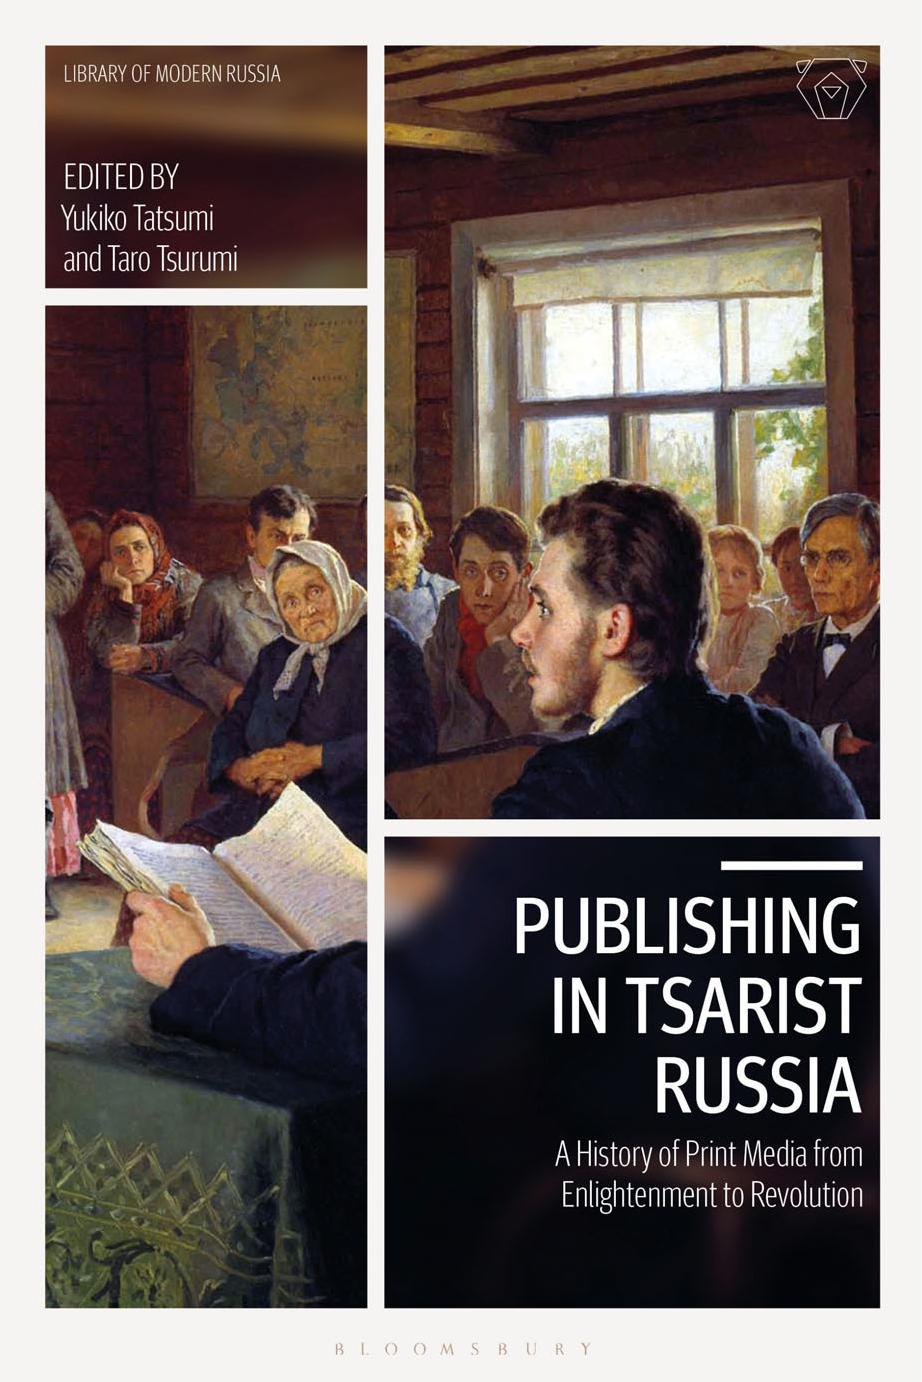 Publishing in Tsarist Russia: A History of Print Media from Enlightenment to Revolution by Yukiko Tatsumi; Taro Tsurumi (editors)